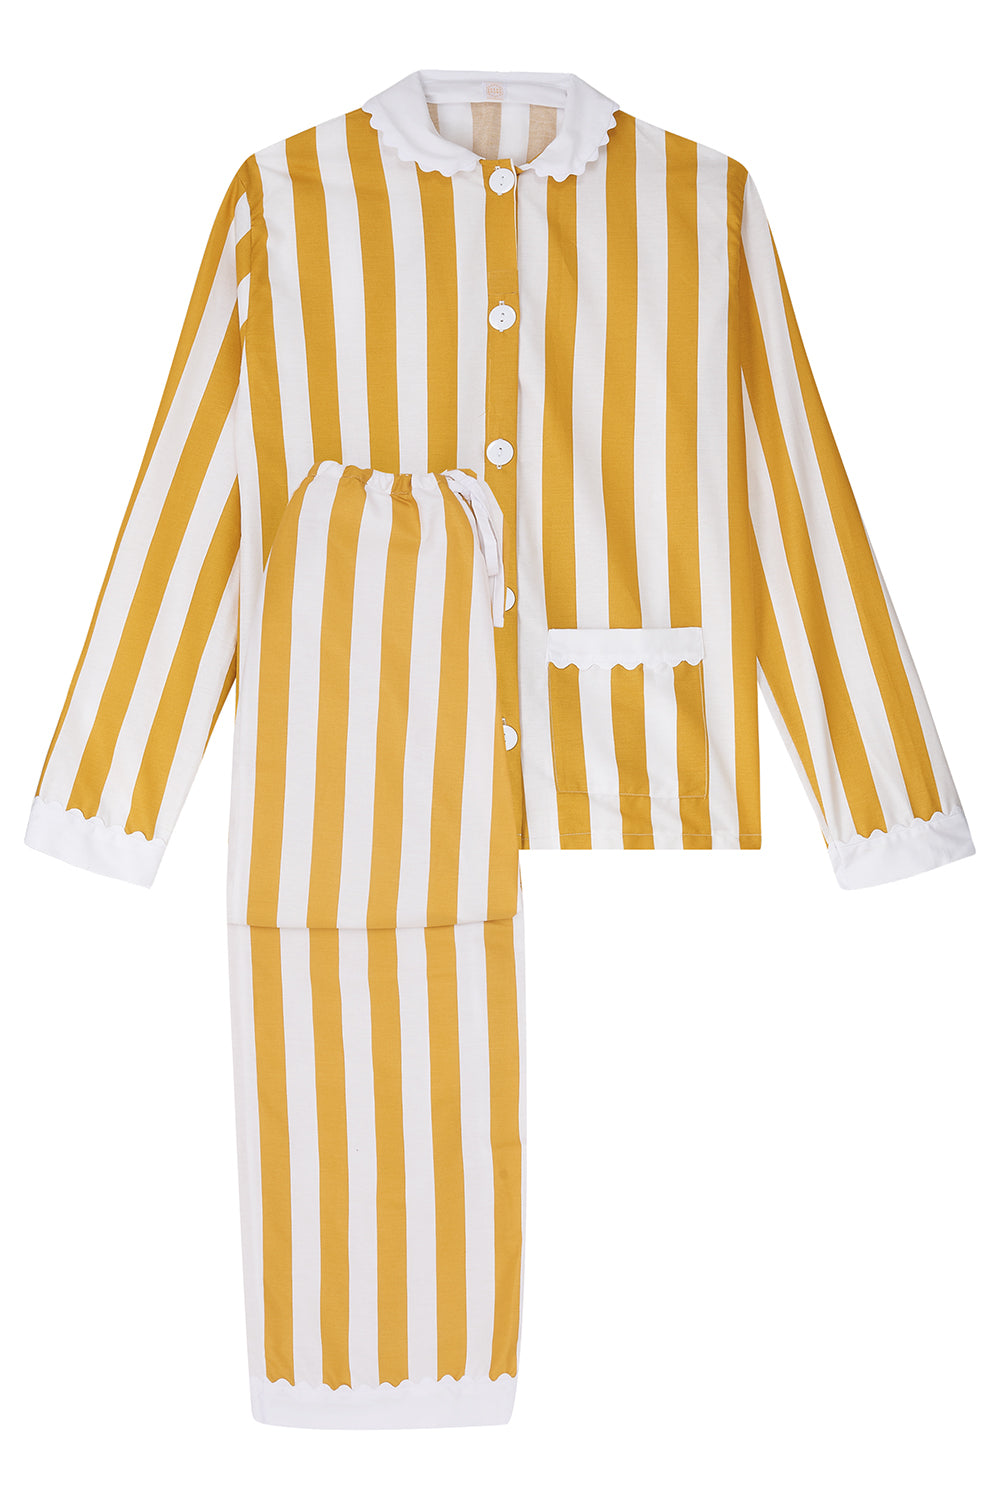 100% Cotton Poplin Ochre  & White Stripe Long Pyjamas with Side Pocket, White Collar and Cuffs Ric Rac Trim